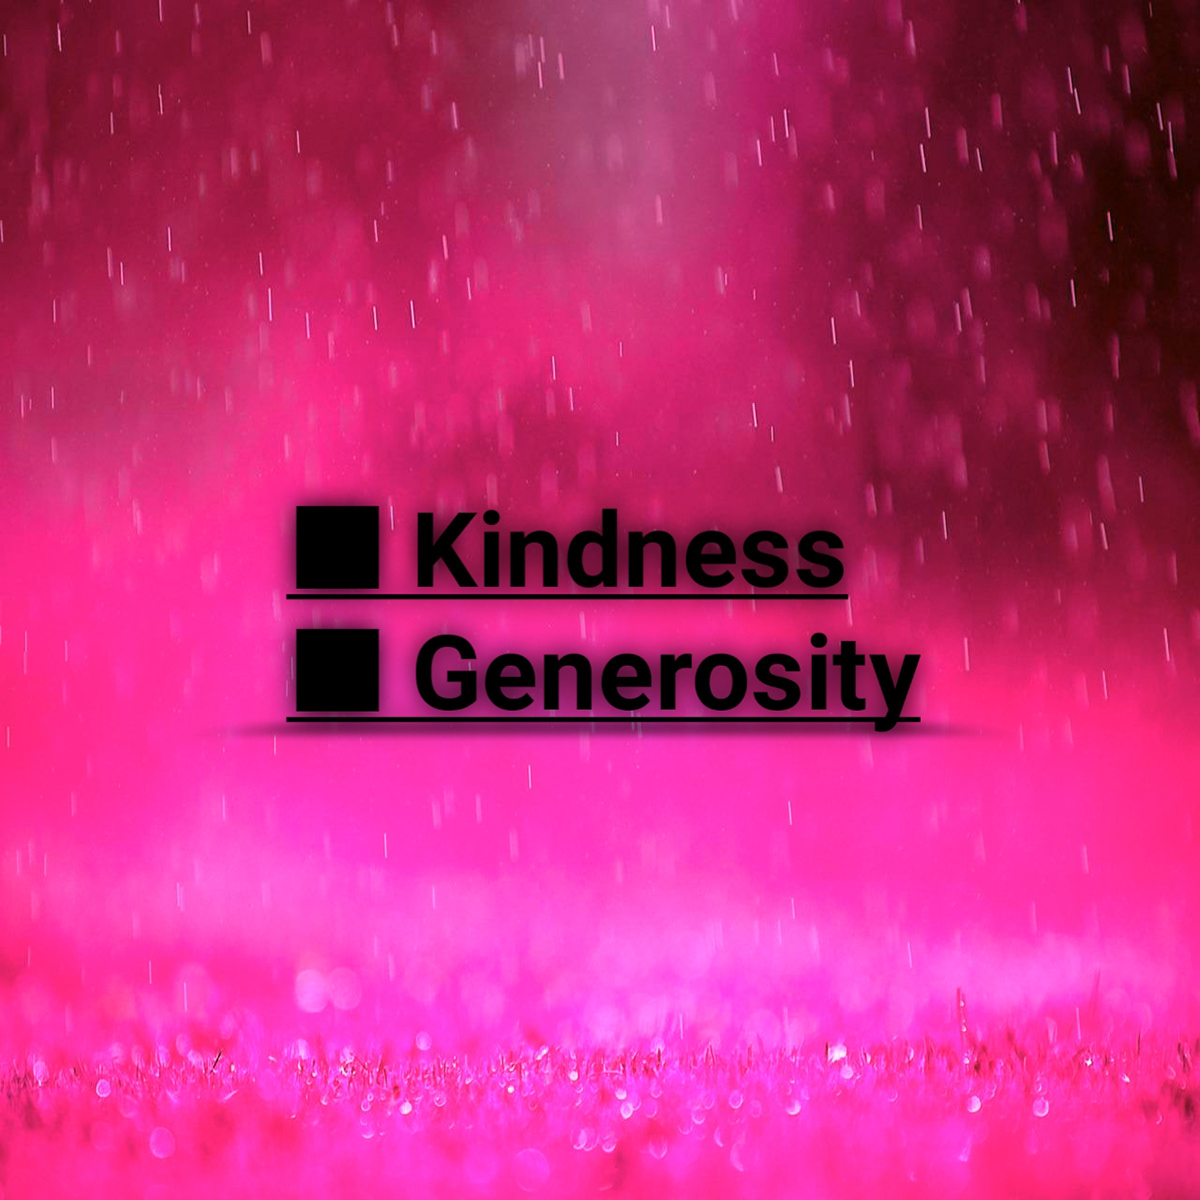 generosity kindness